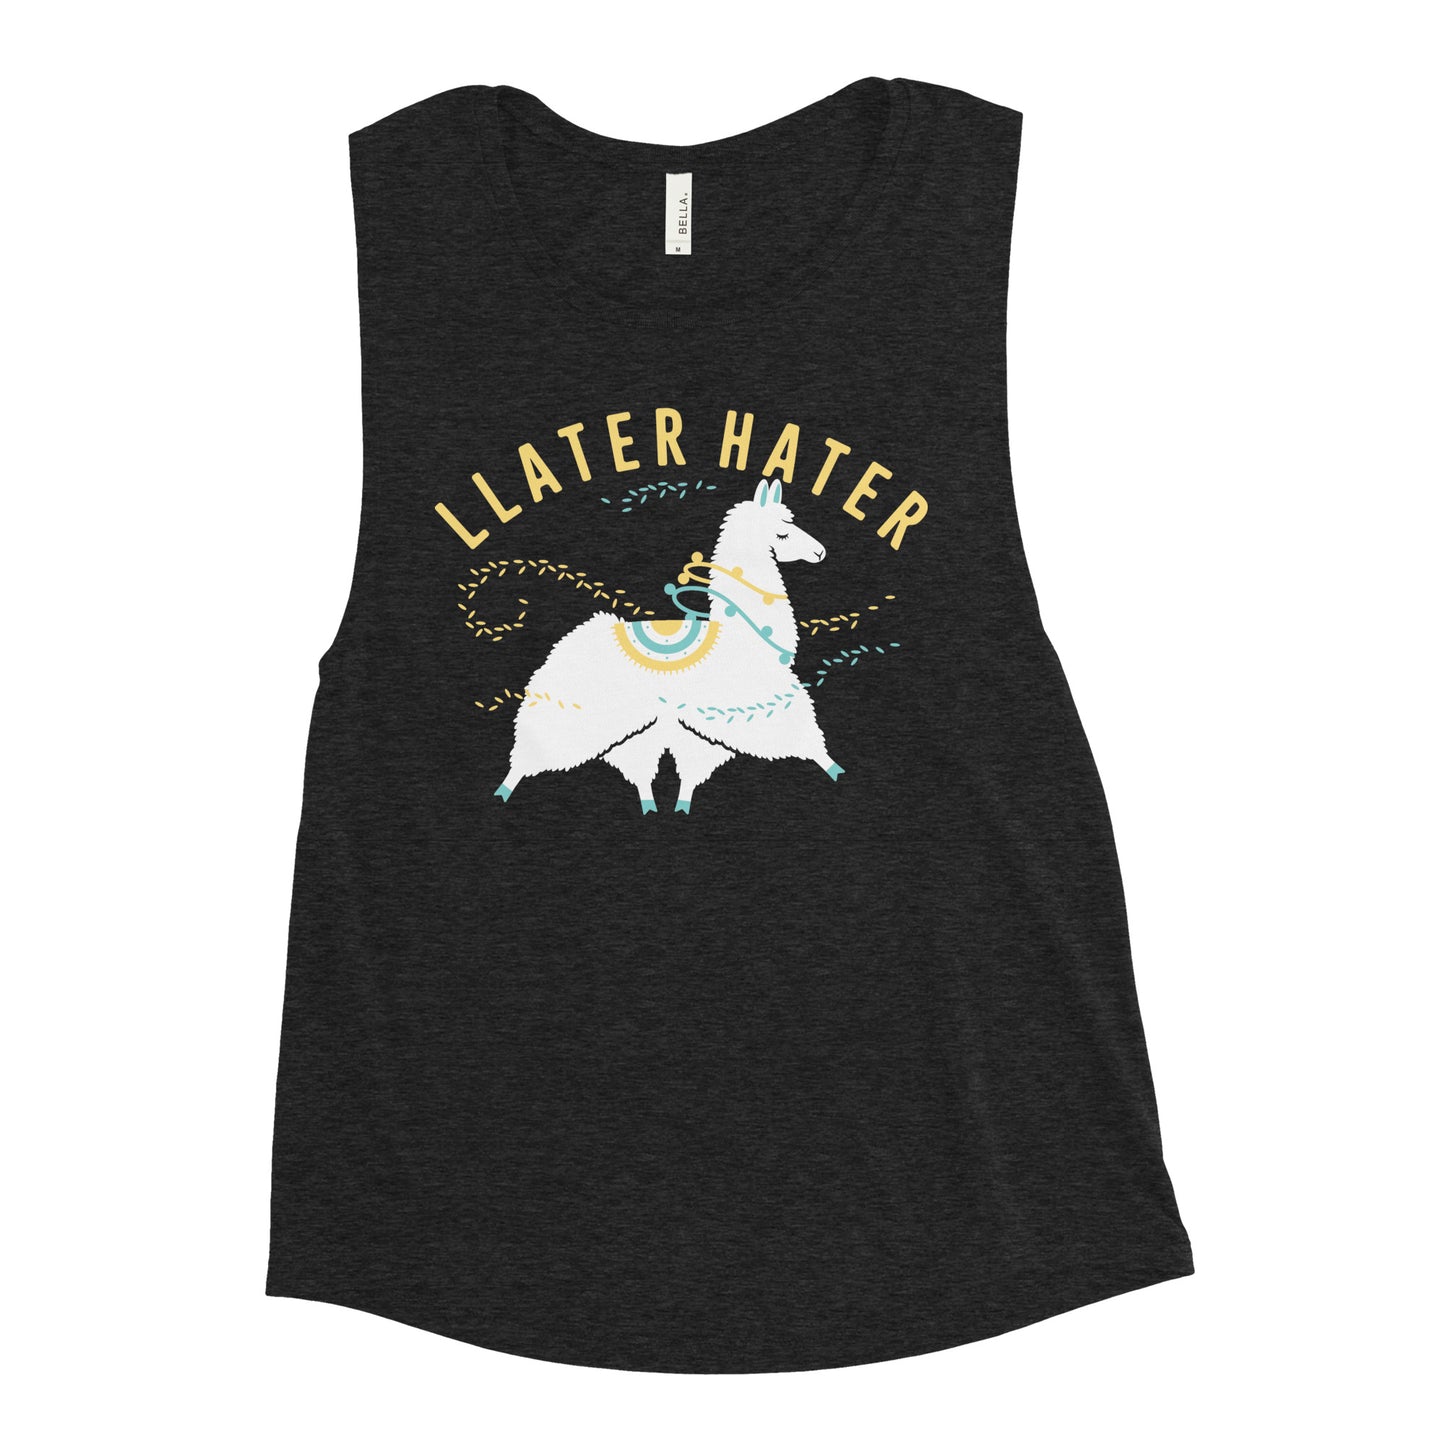 Llater Hater Women's Muscle Tank